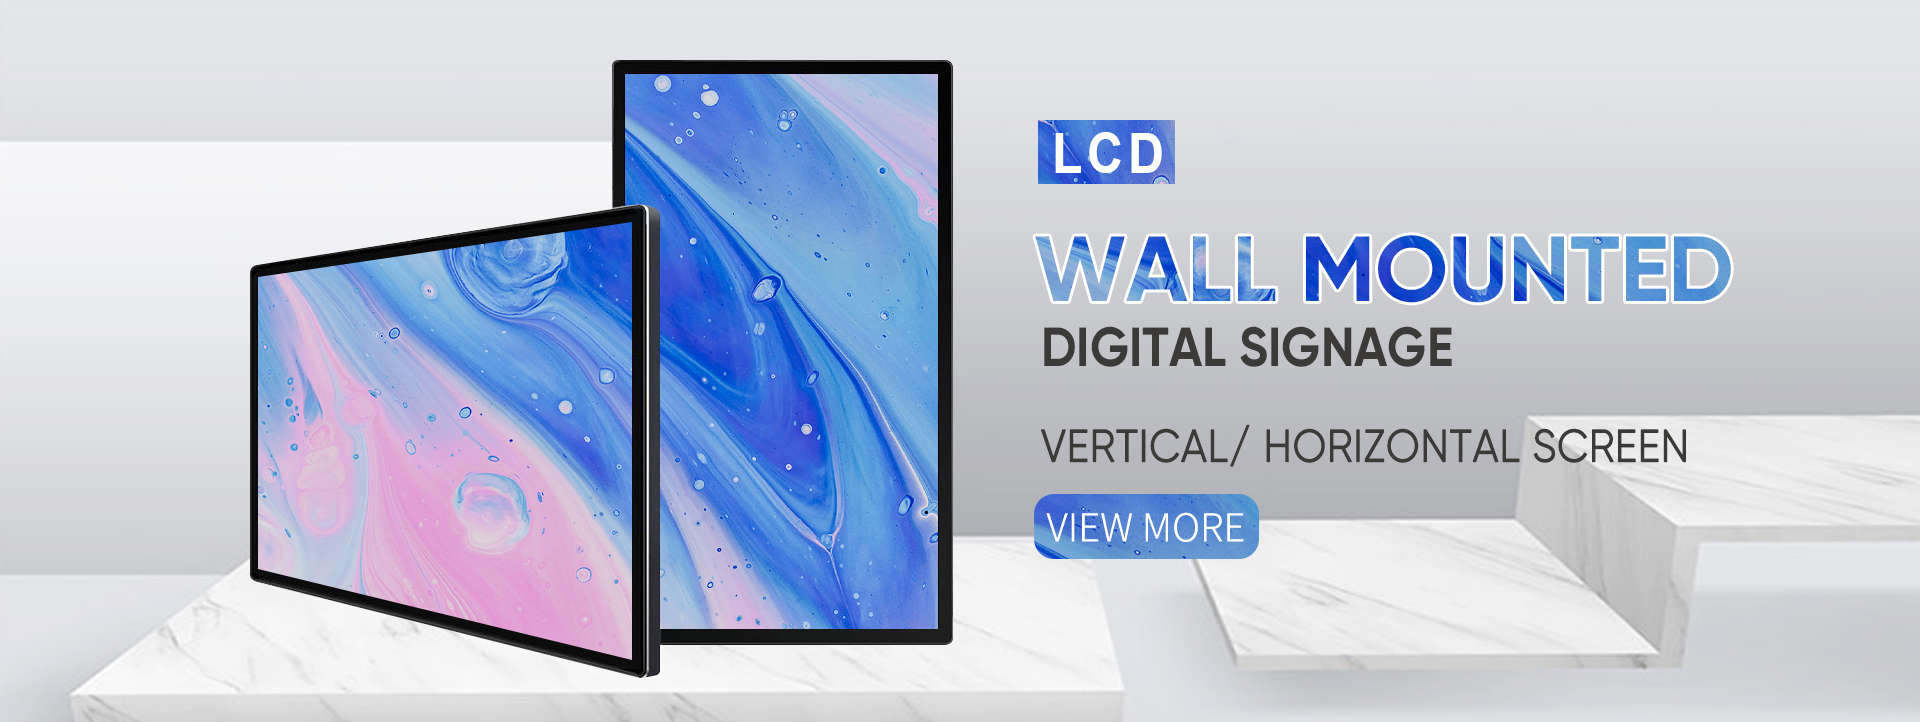 LCD WALL MOUNTED DIGITAL SIGNAGE